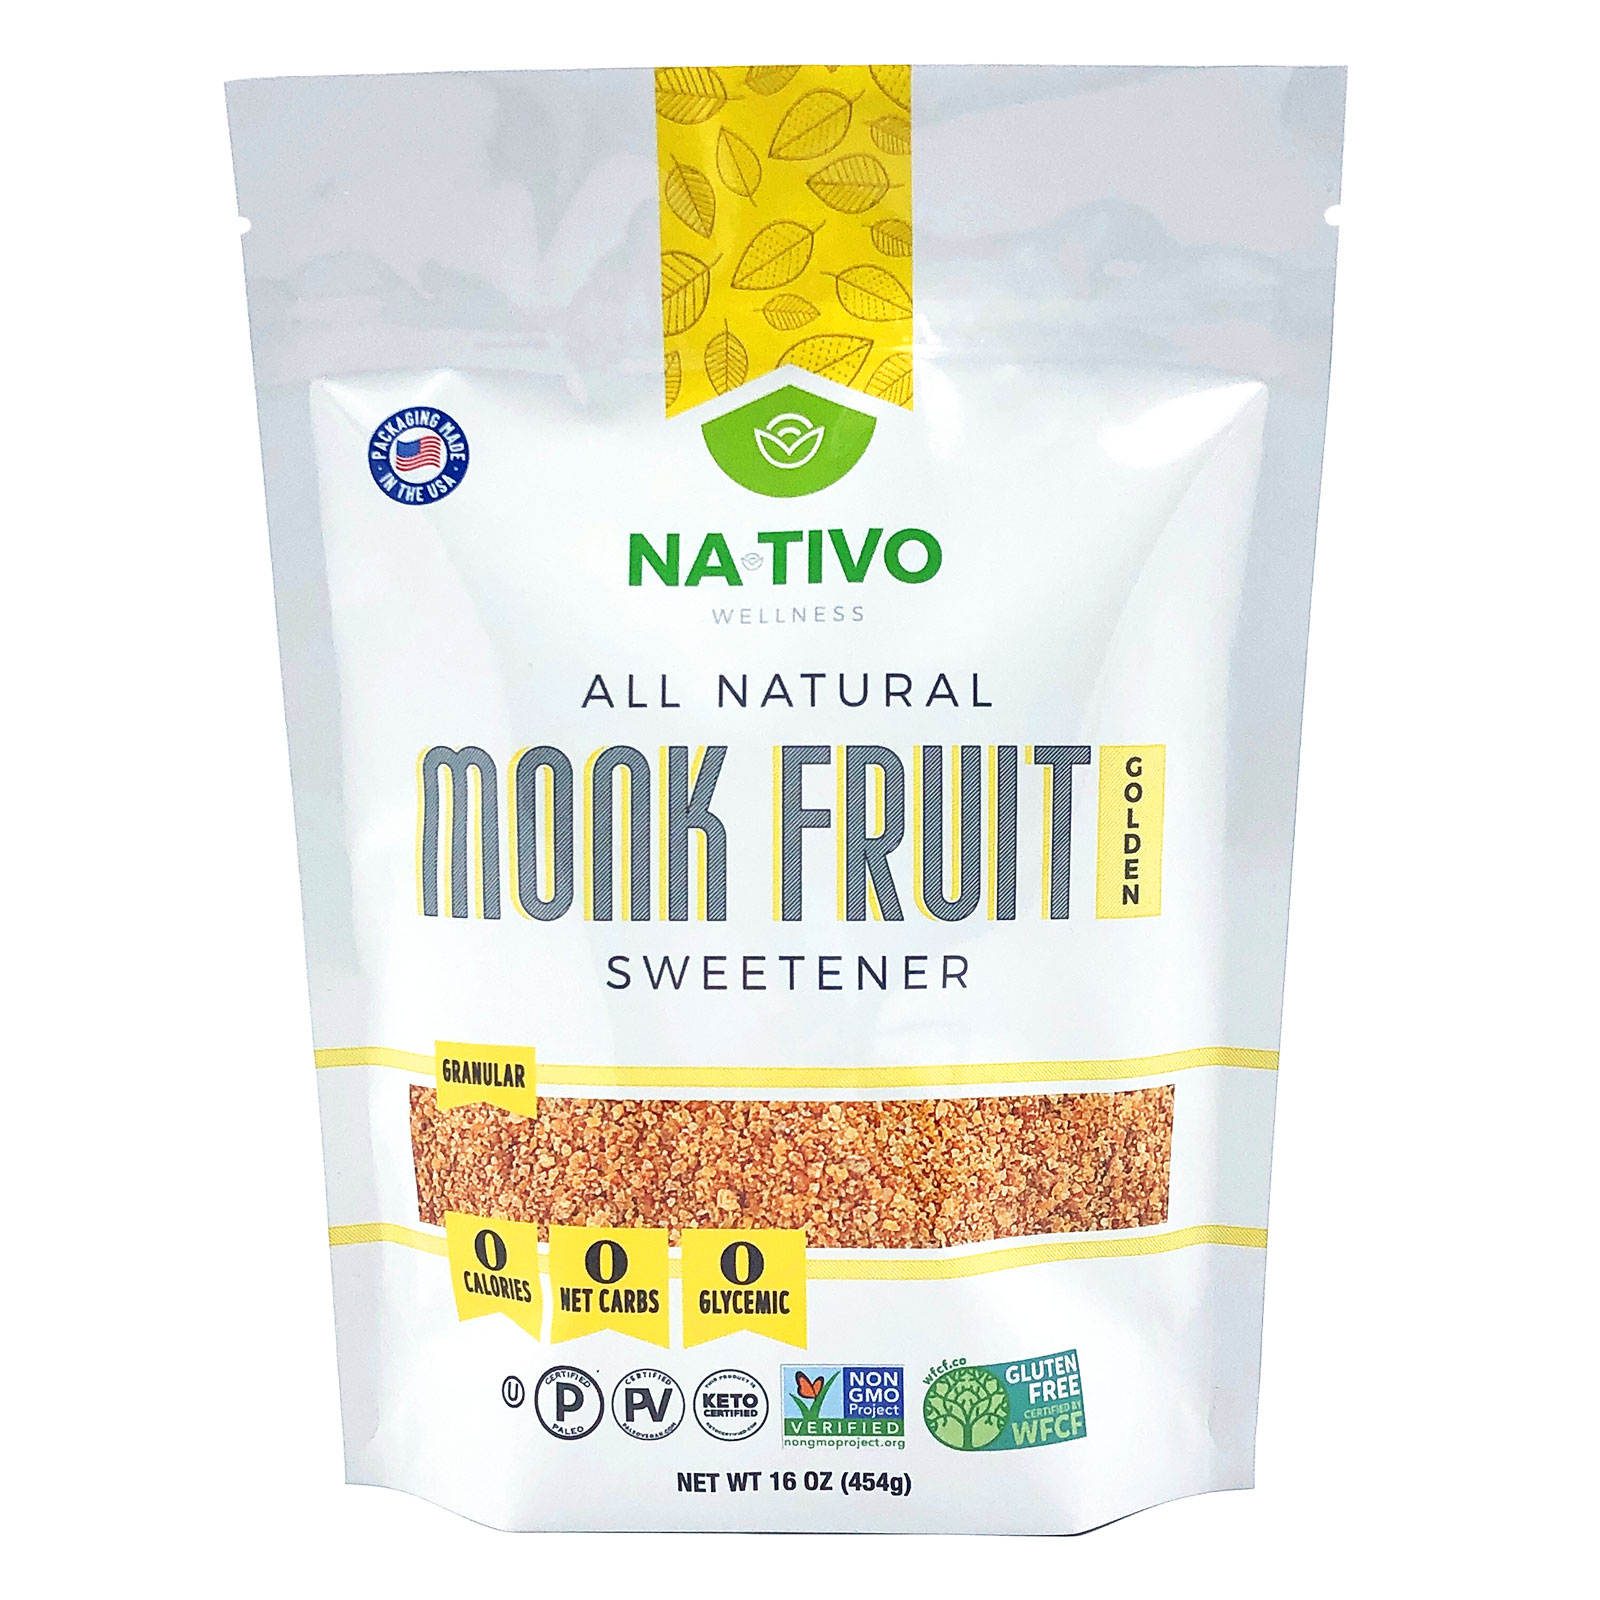 NaTivo All Natural Monk Fruit Golden Sweetener 12 units per case 1.0 lb